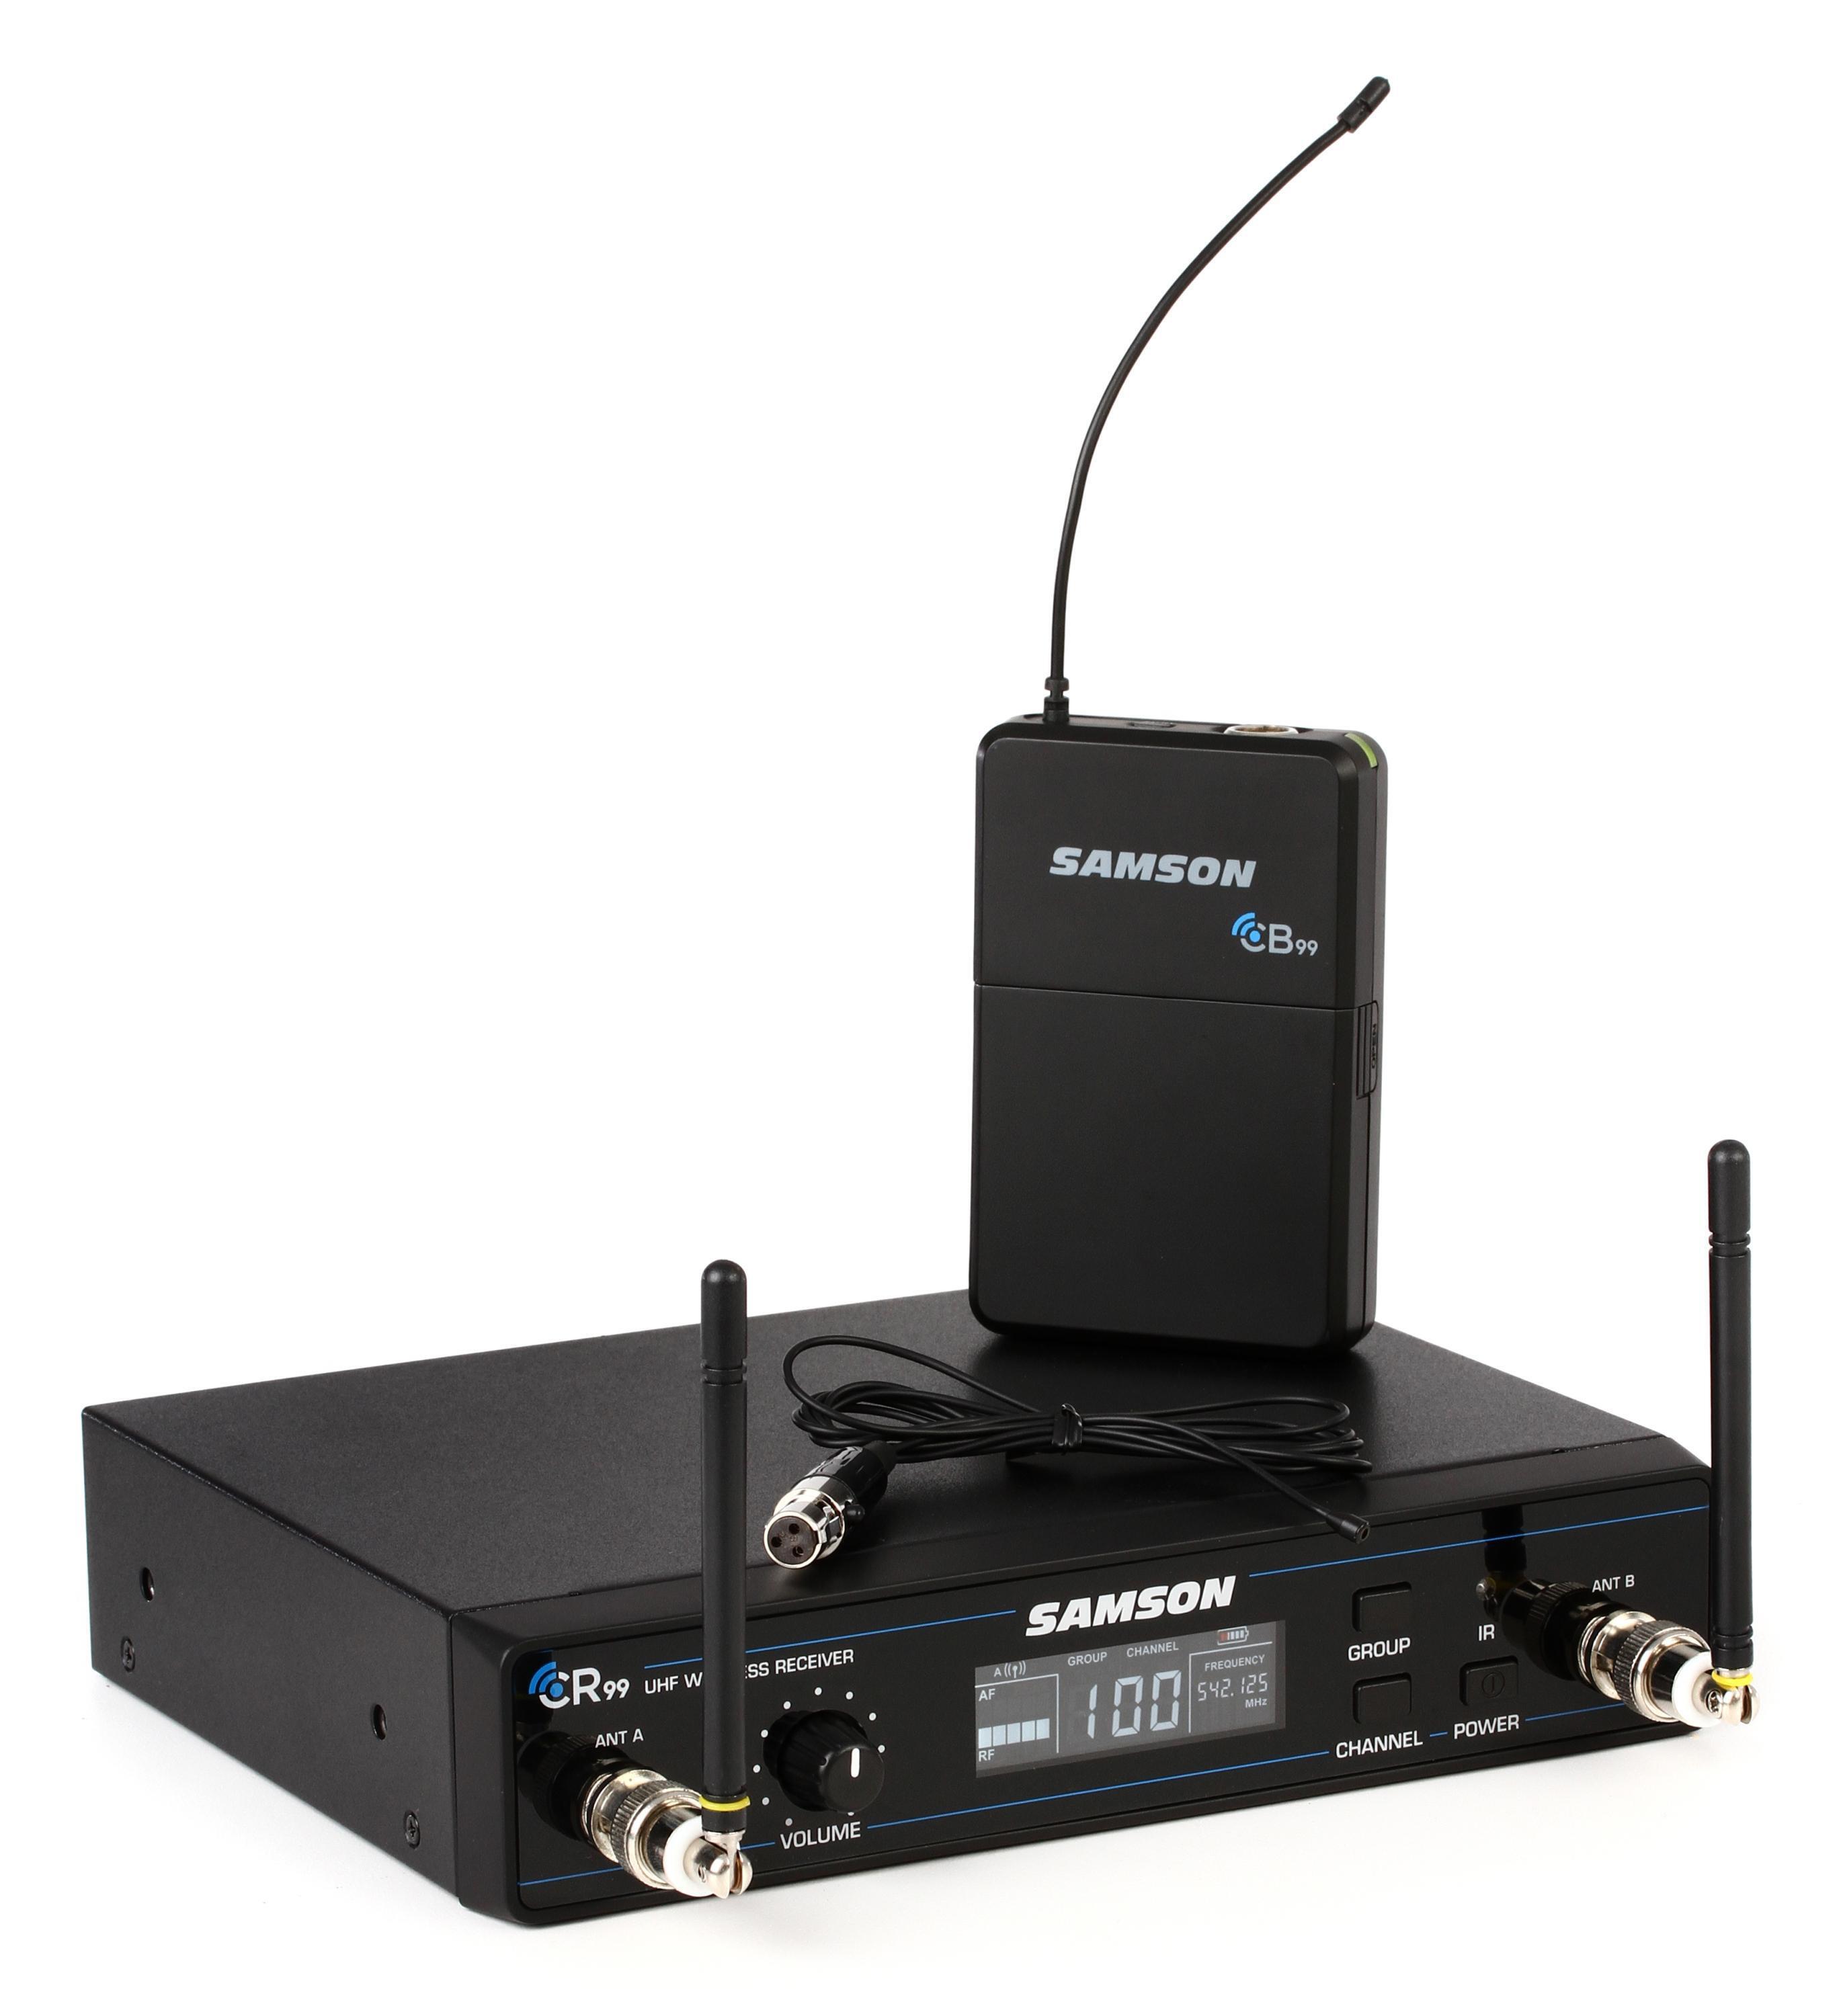 Samson Concert 99 Presentation Wireless System with LM10 Lavalier